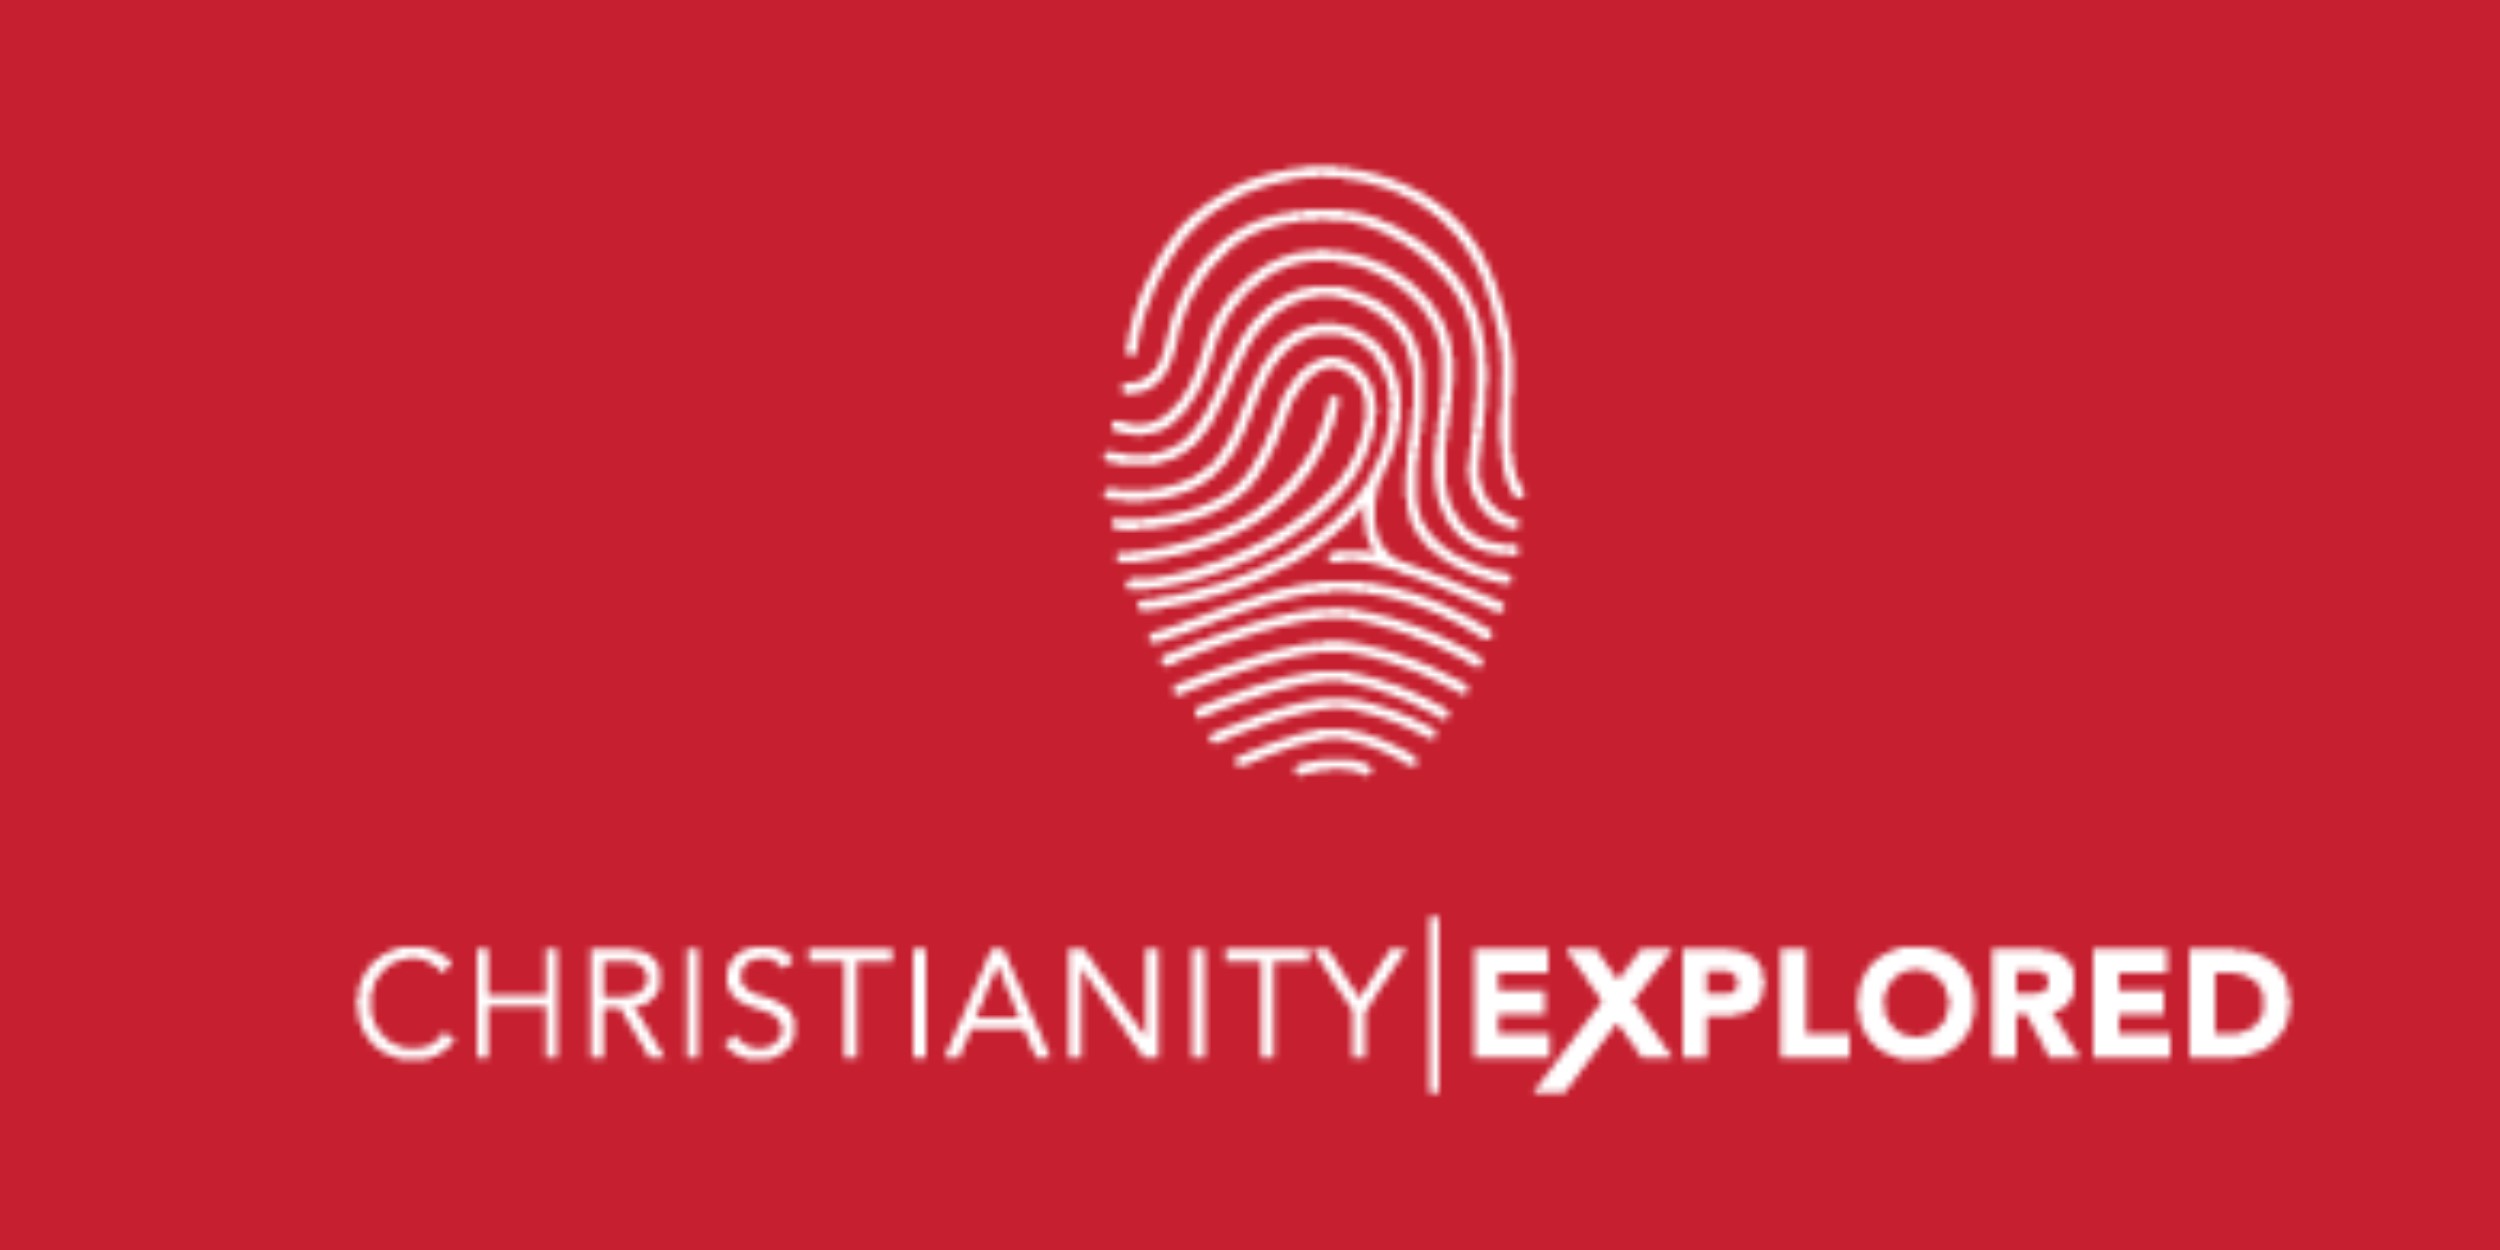 Christianity explored